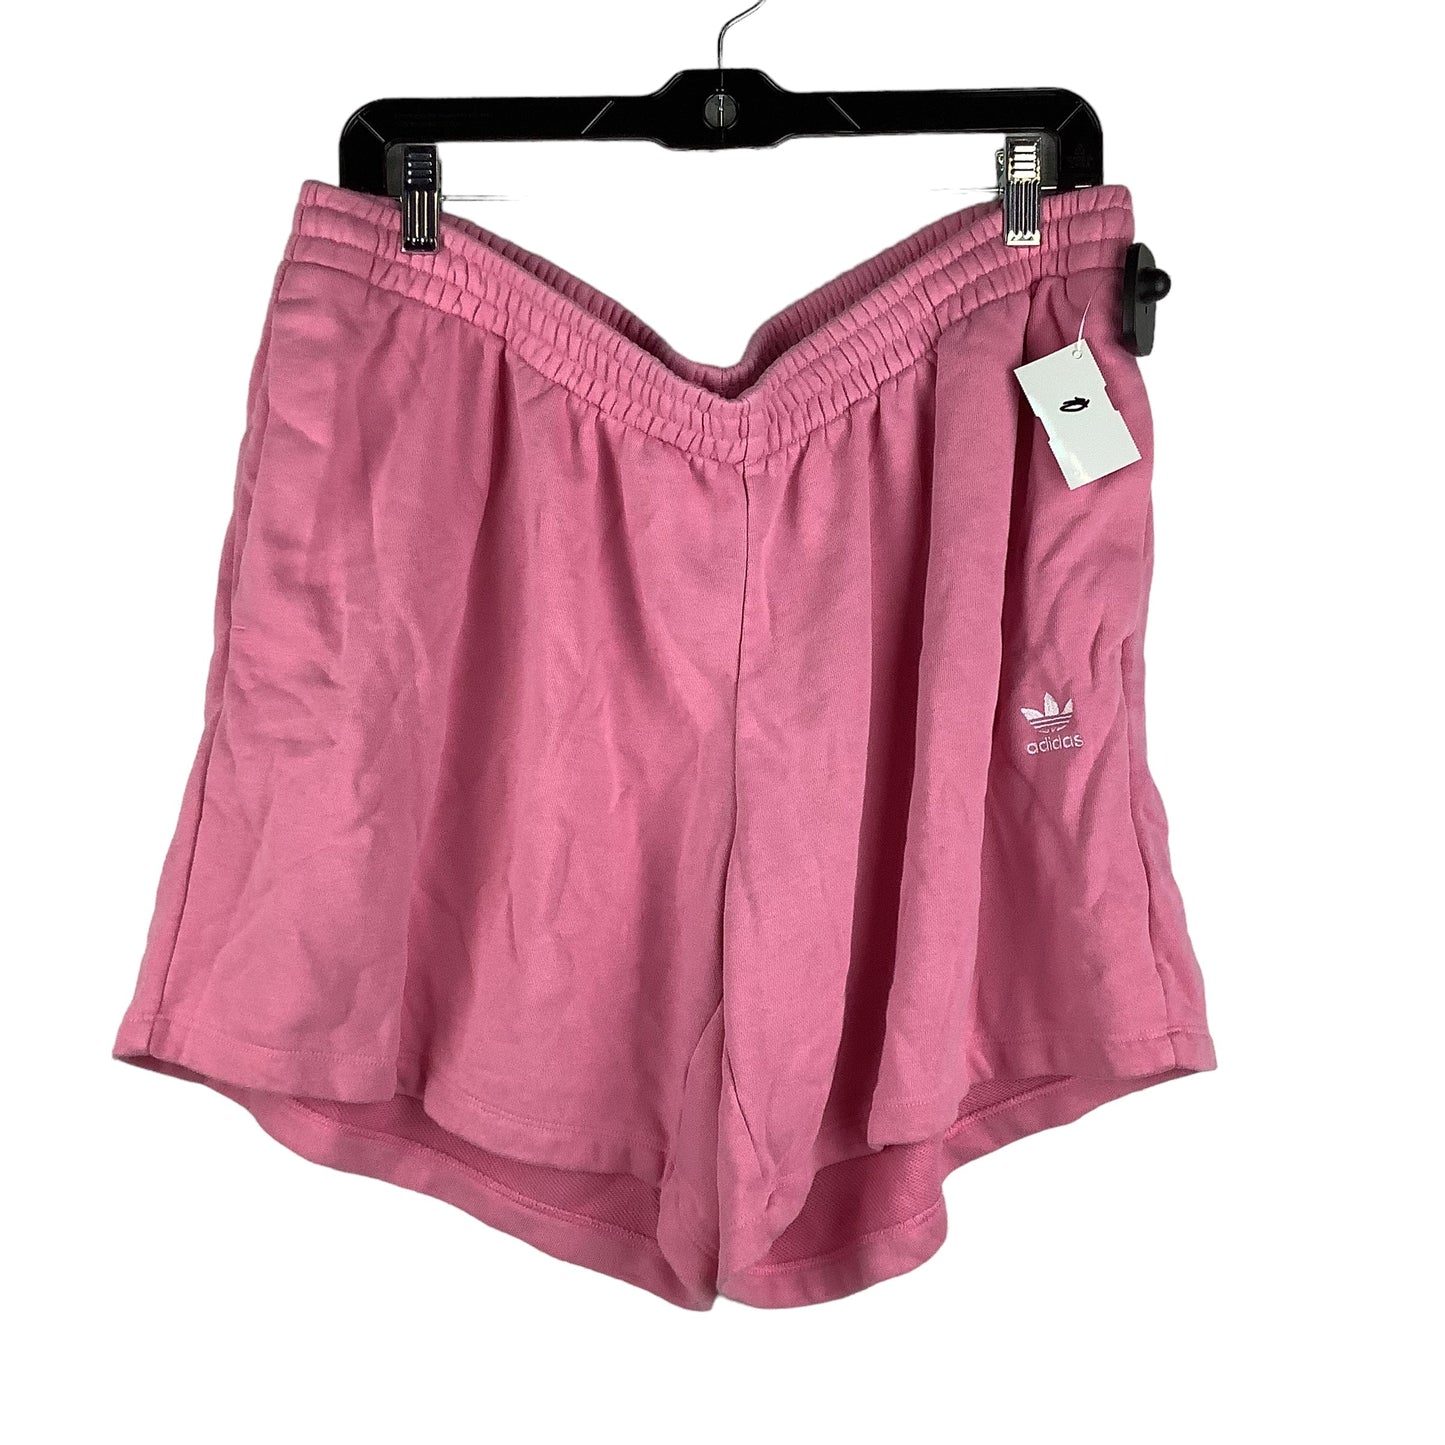 Pink Athletic Shorts Adidas, Size 1x